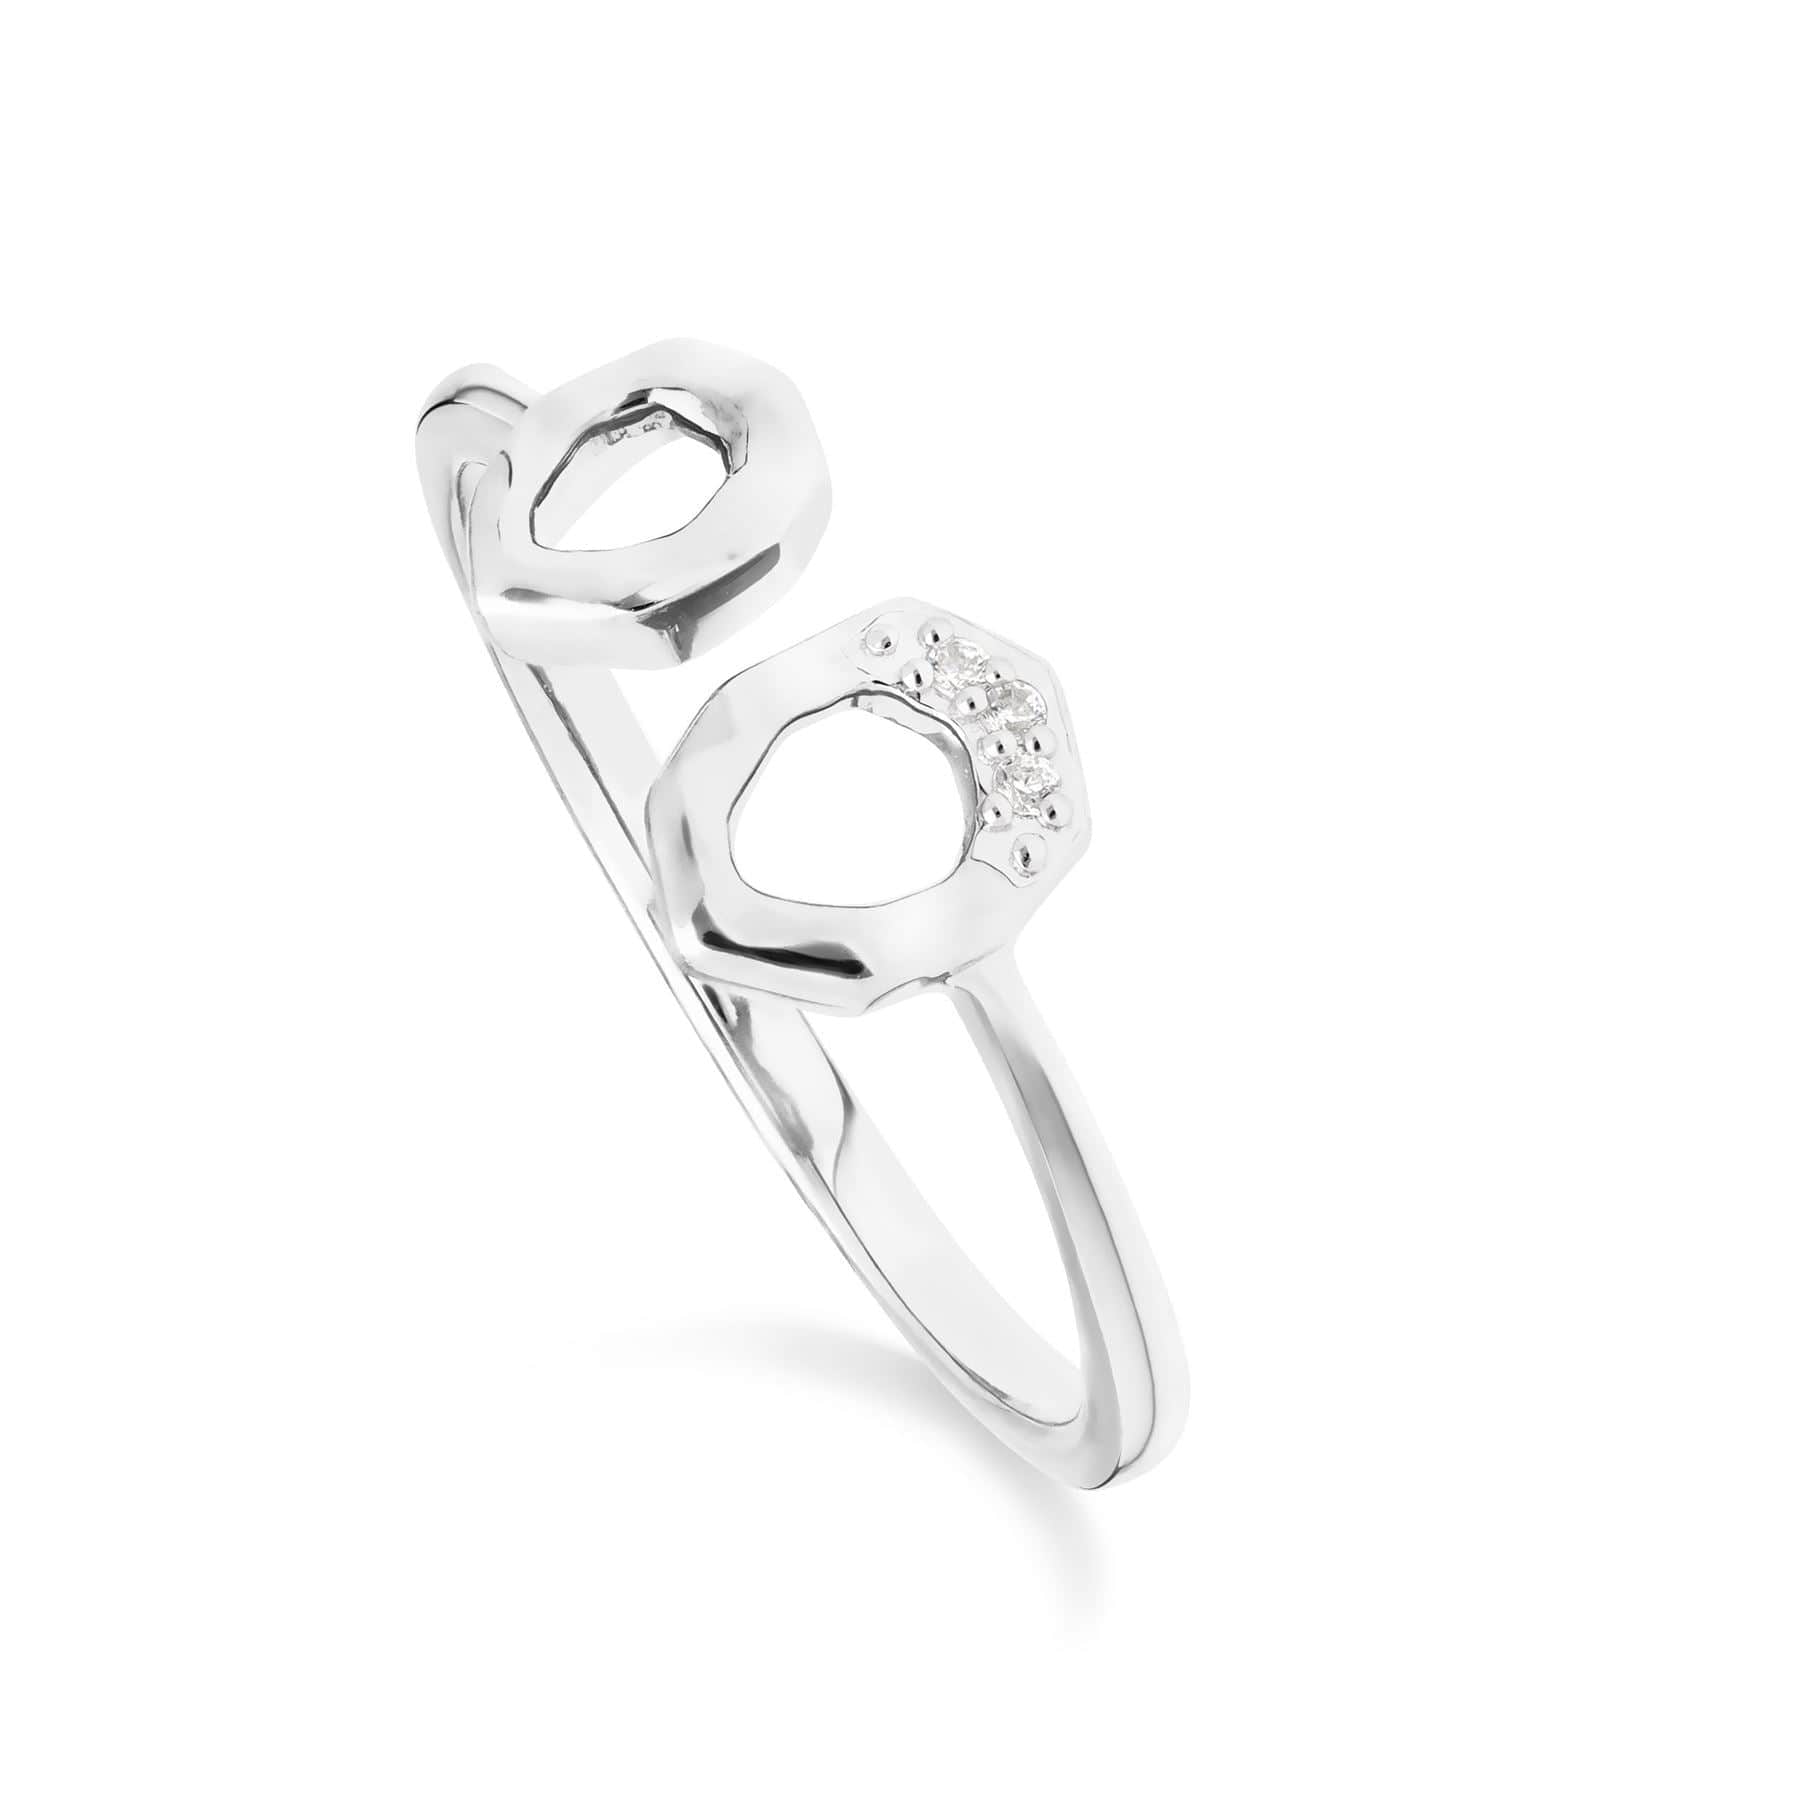 162E0269019-162R0391019 Diamond Pave Asymmetrical Stud Earring & Ring Set in 9ct White Gold 3